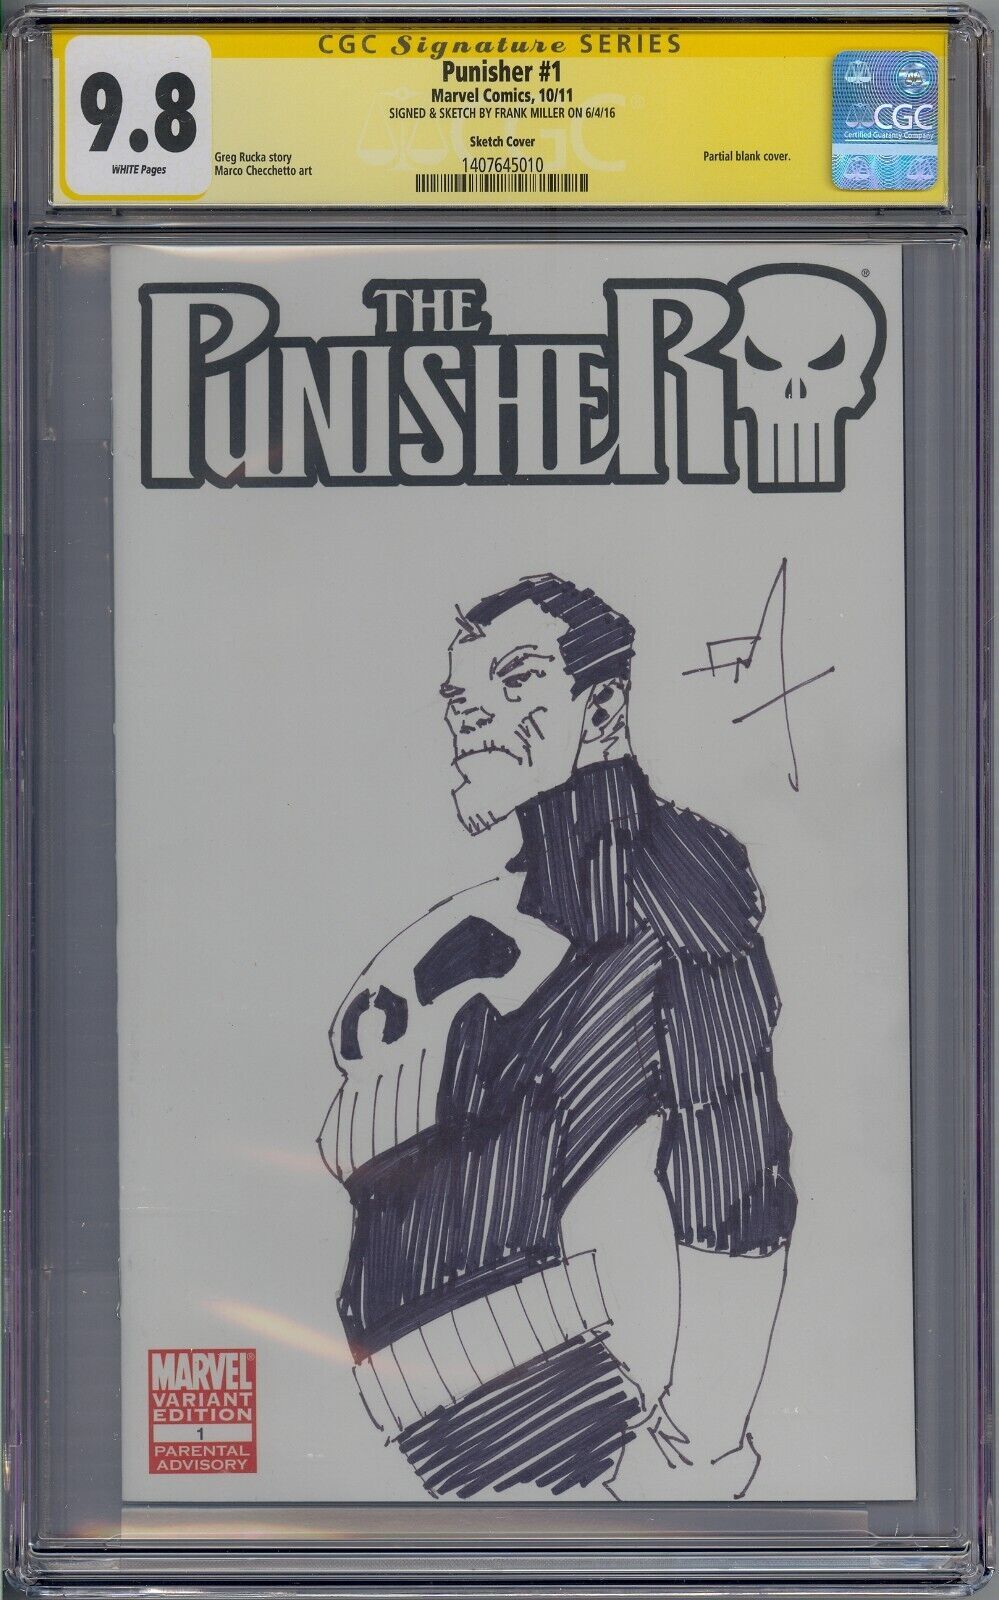 OC] Punisher sketch. : r/comicbookart